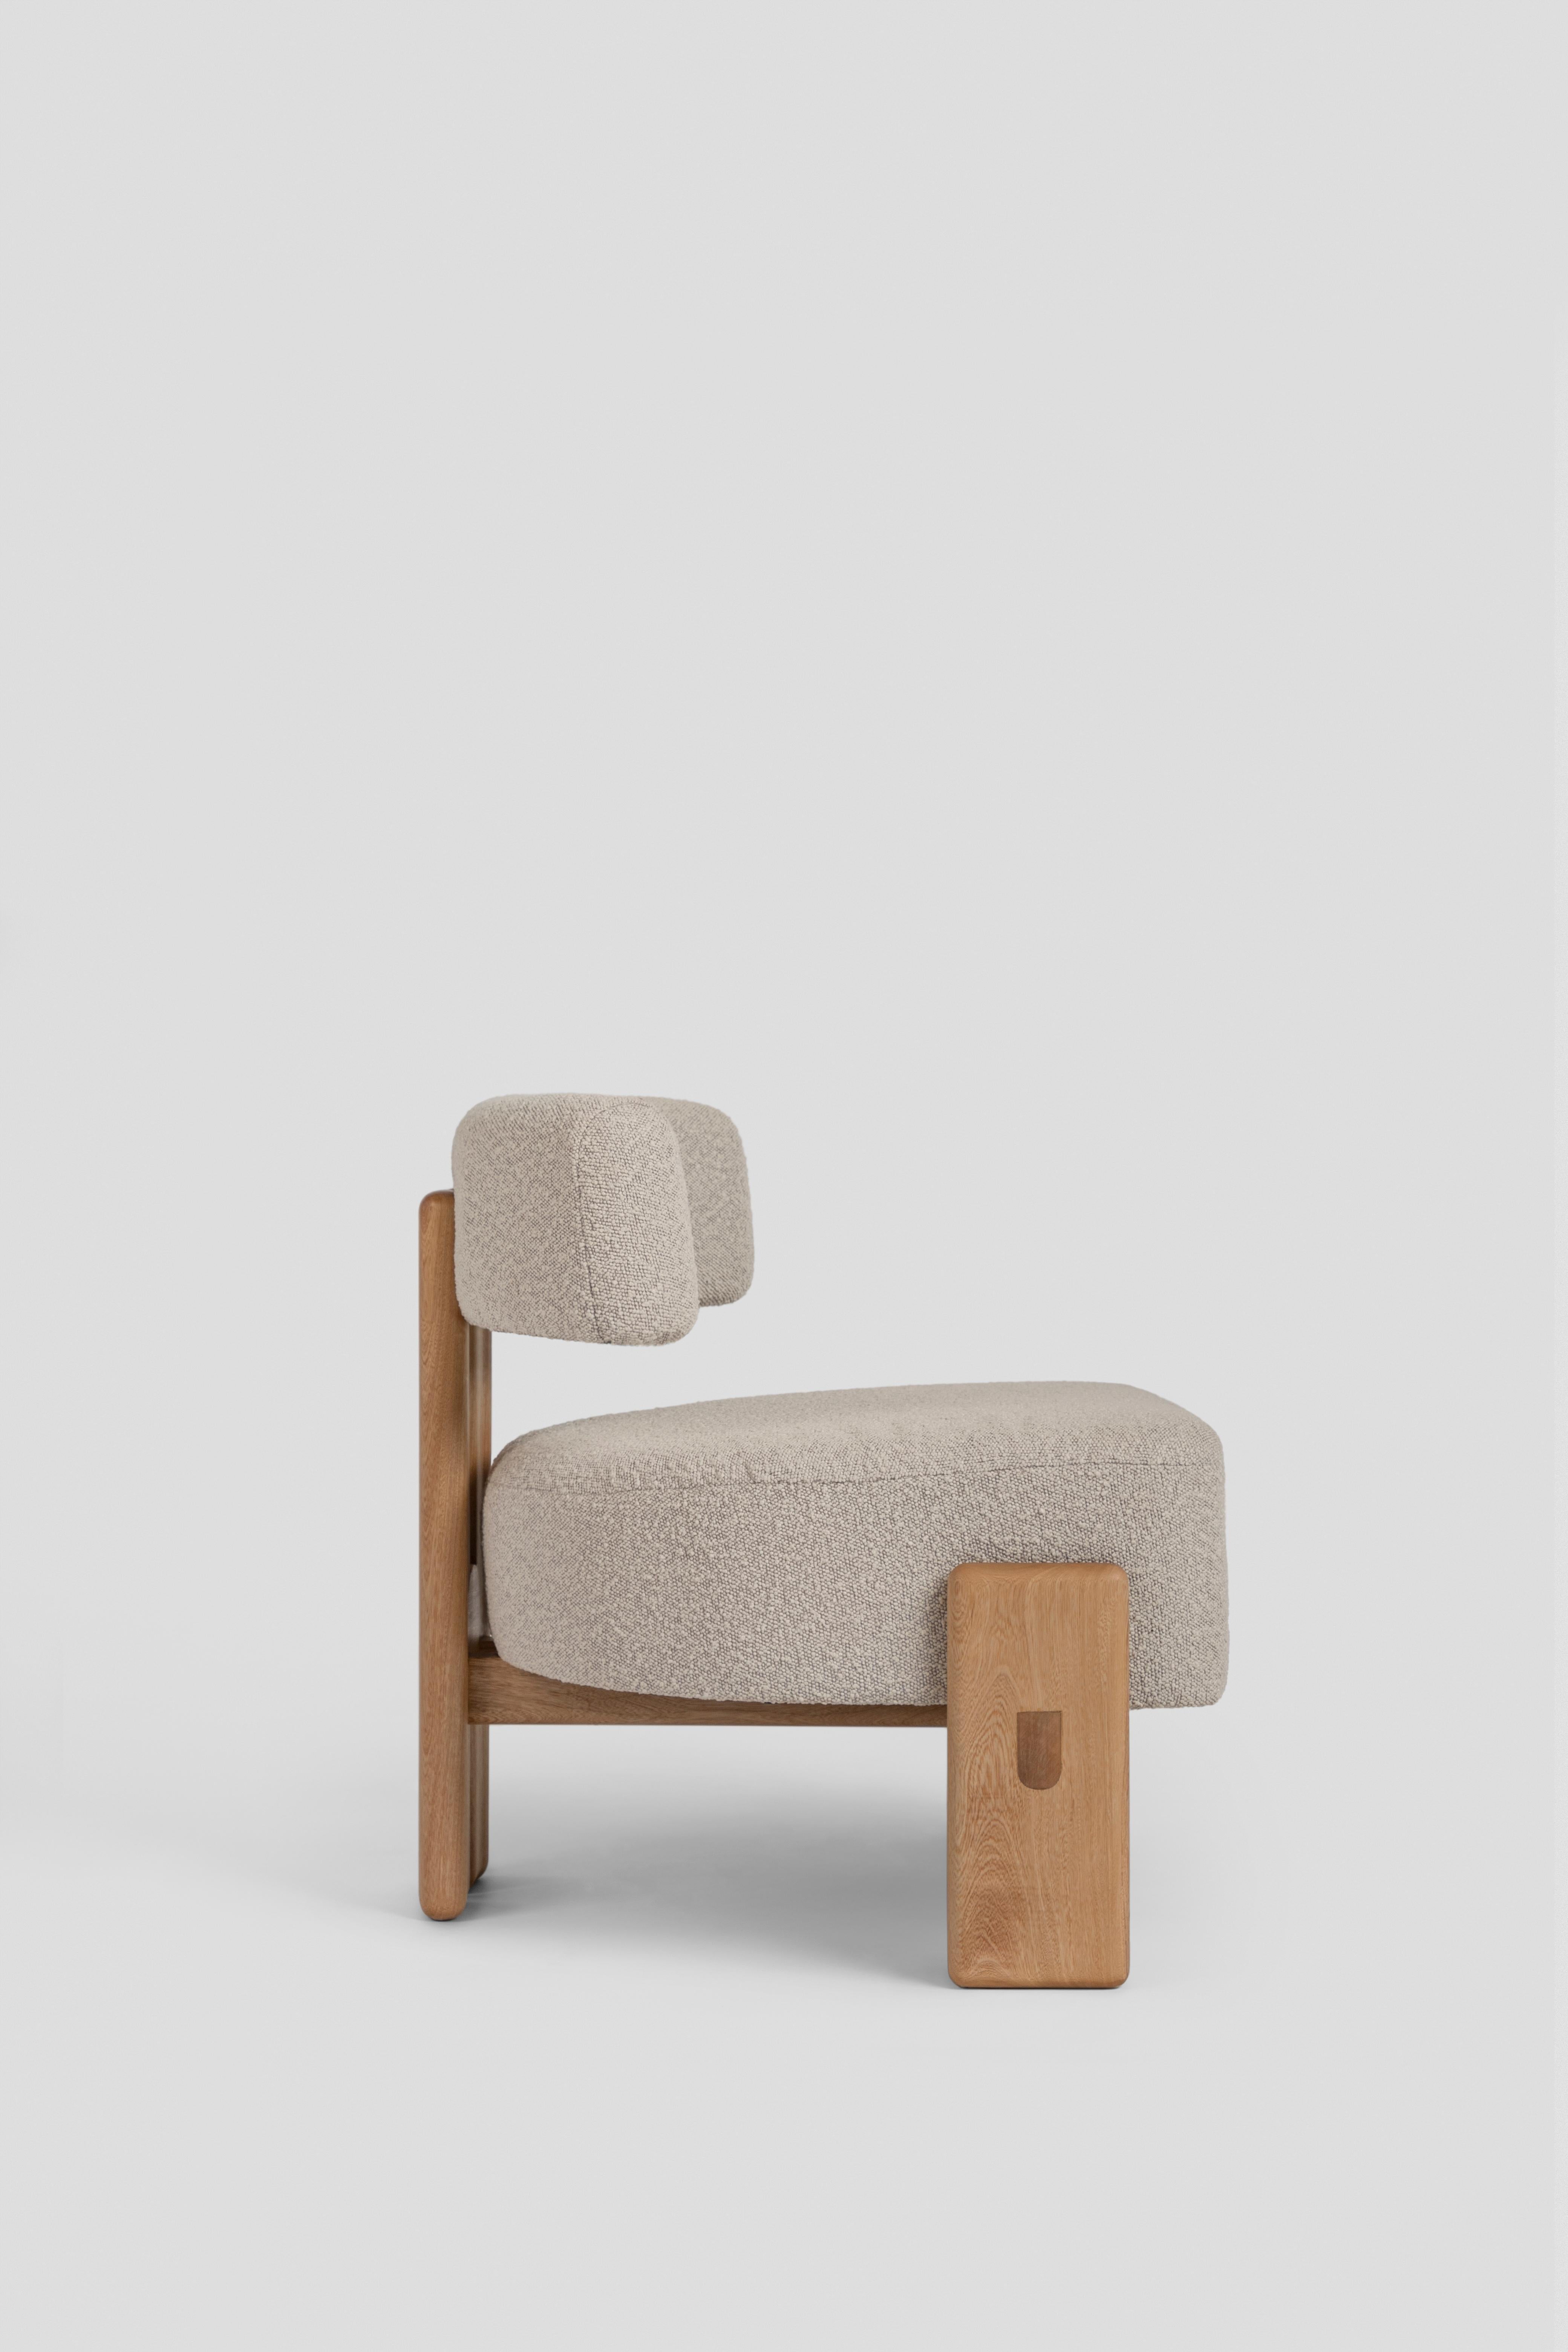 Modern De la Paz Low Chair Solid Wood COM, Contemporary Mexican Design